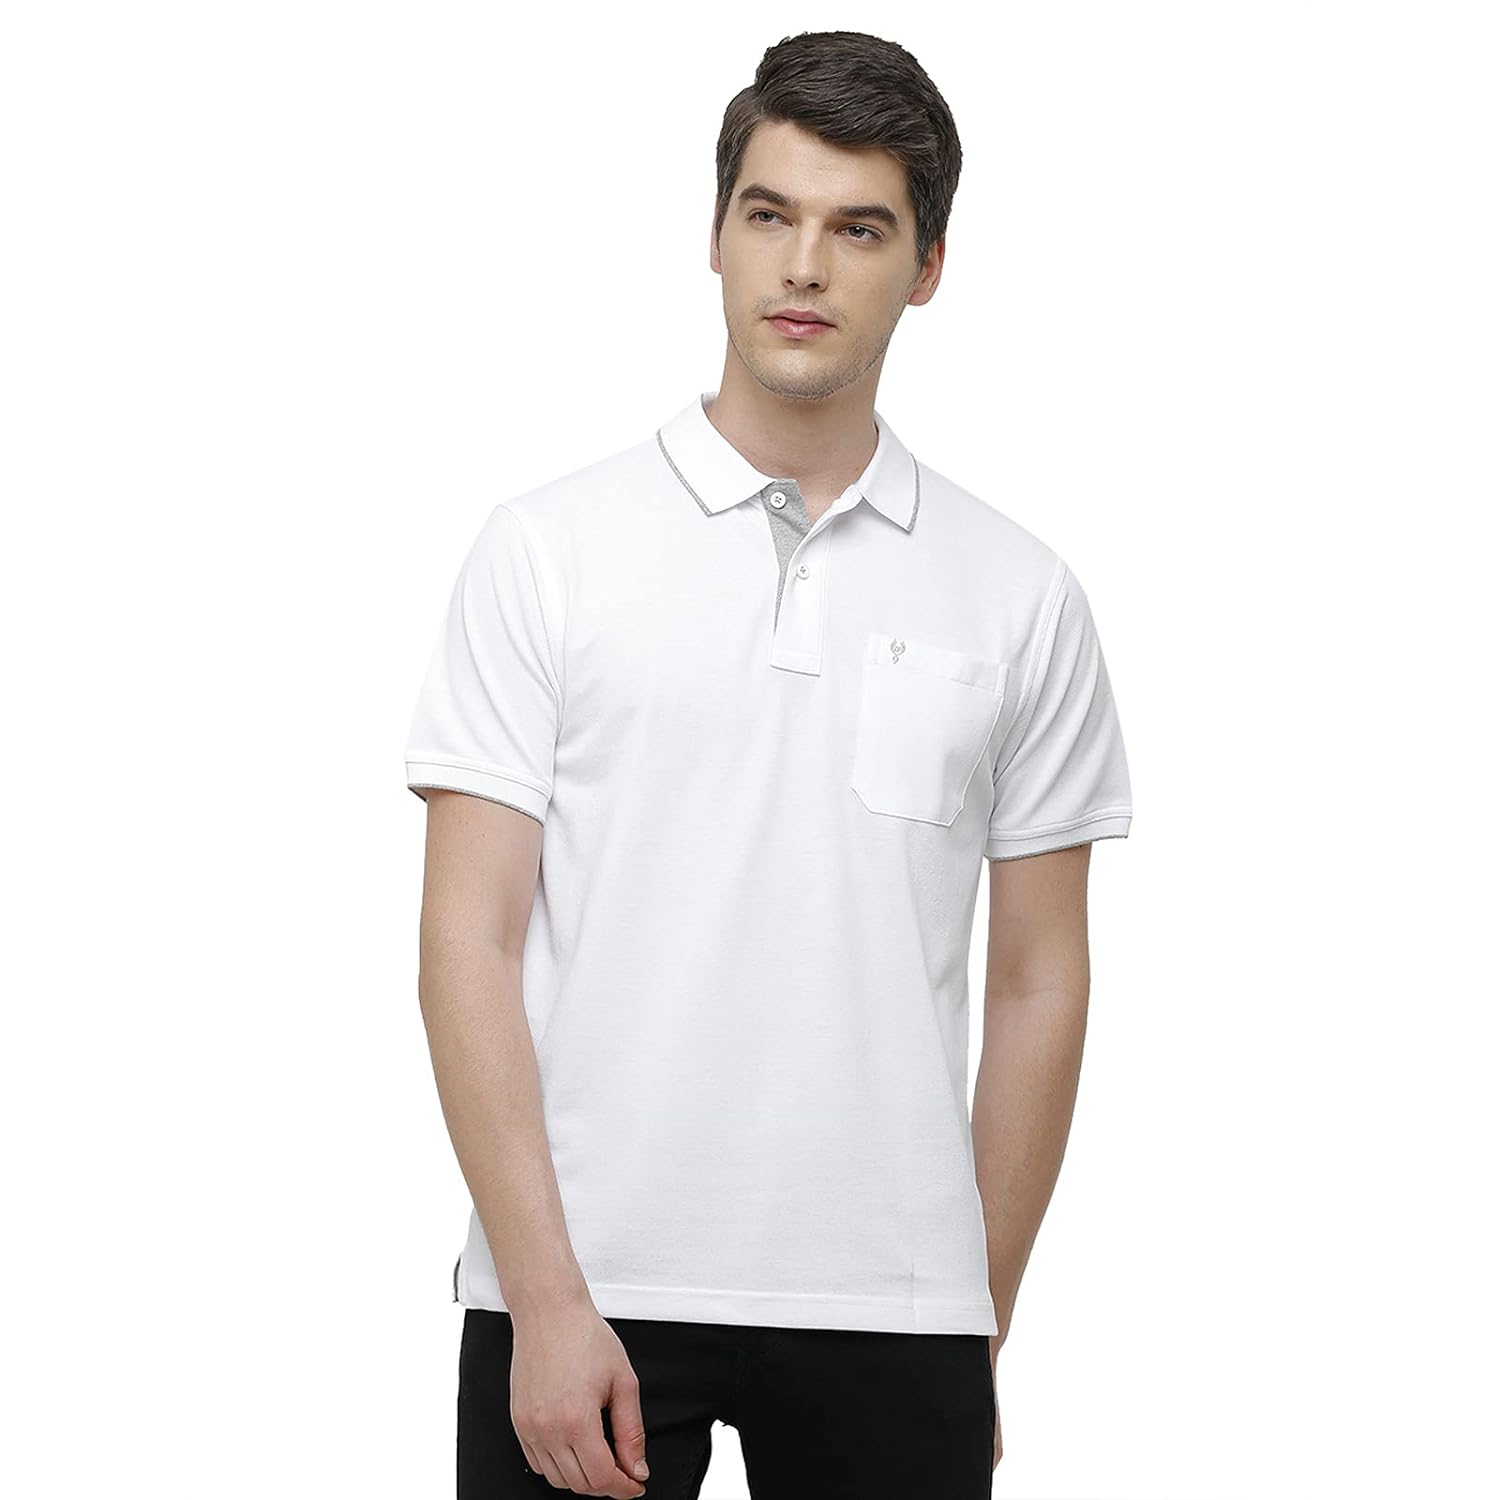 White Corporate T Shirts